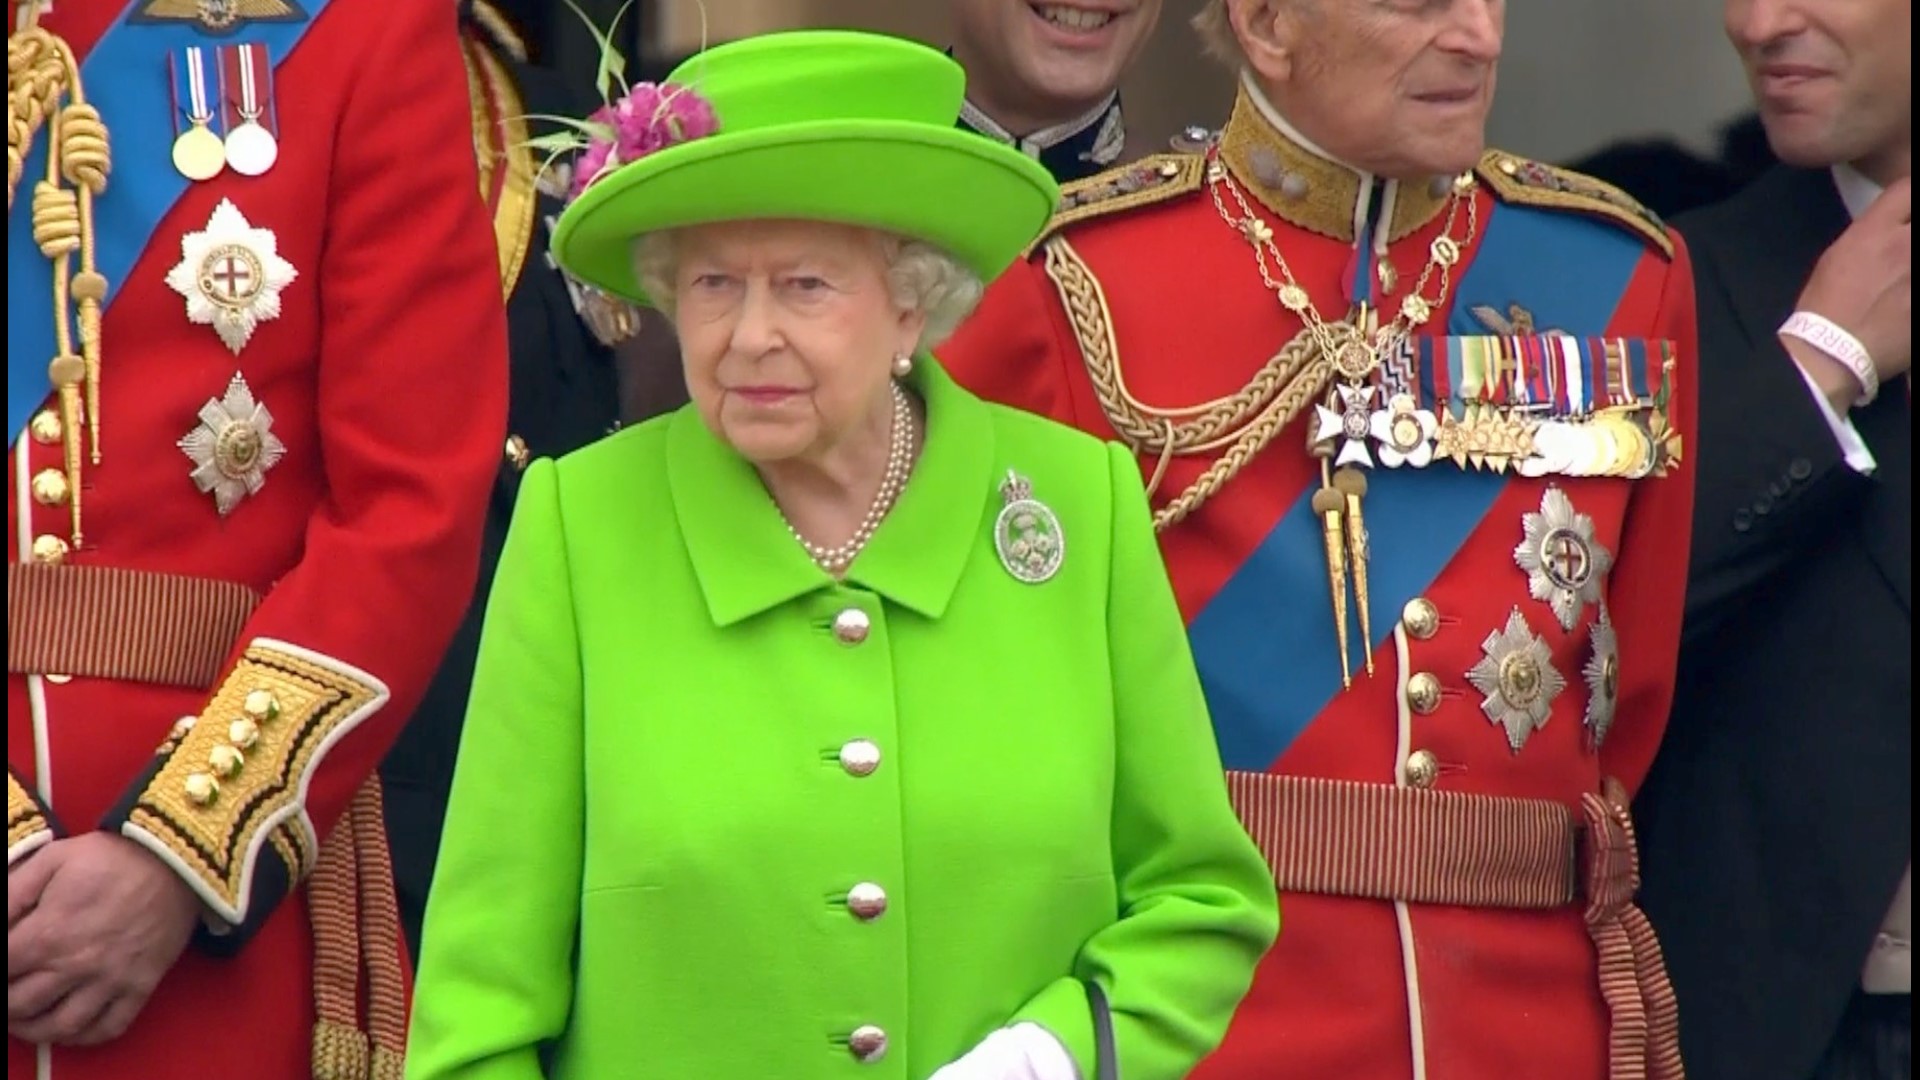 Queen Elizabeth II celebrates 94th birthday | cbs8.com